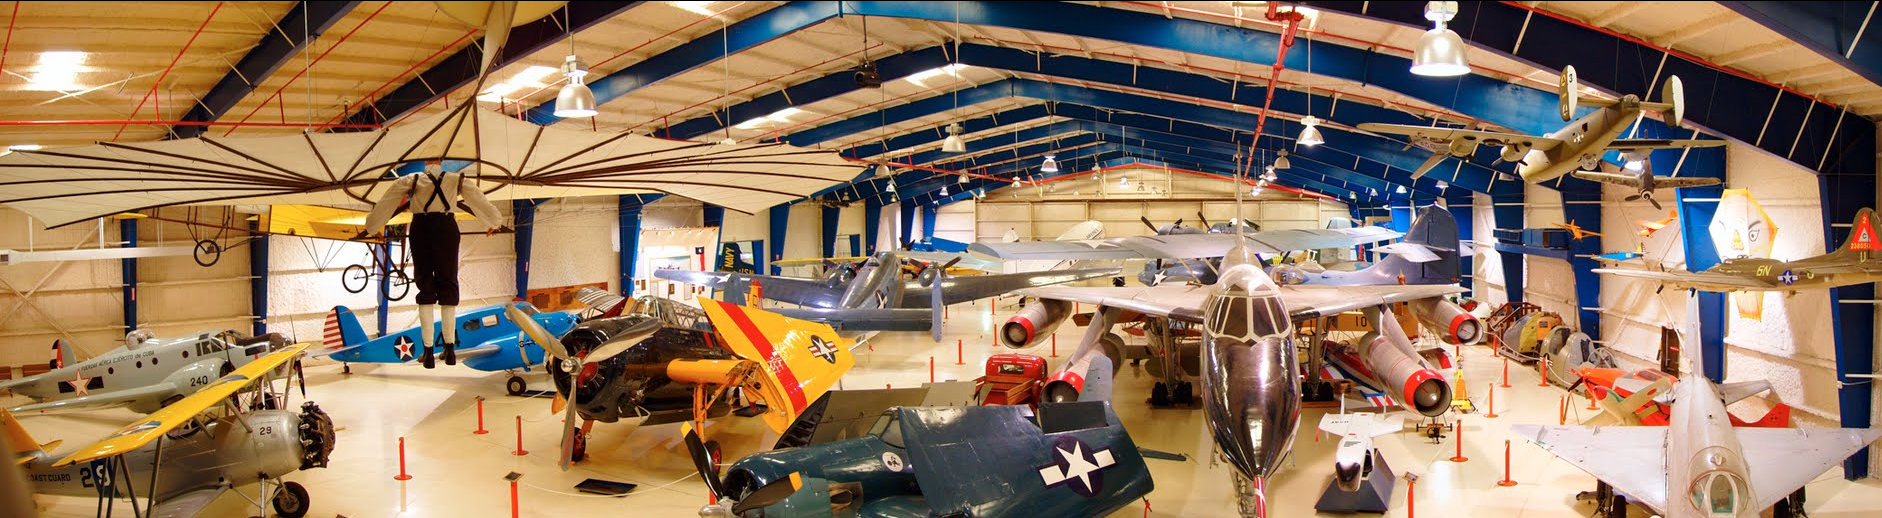 Lone-Star-Flight-Museum-Galveston-Texas-